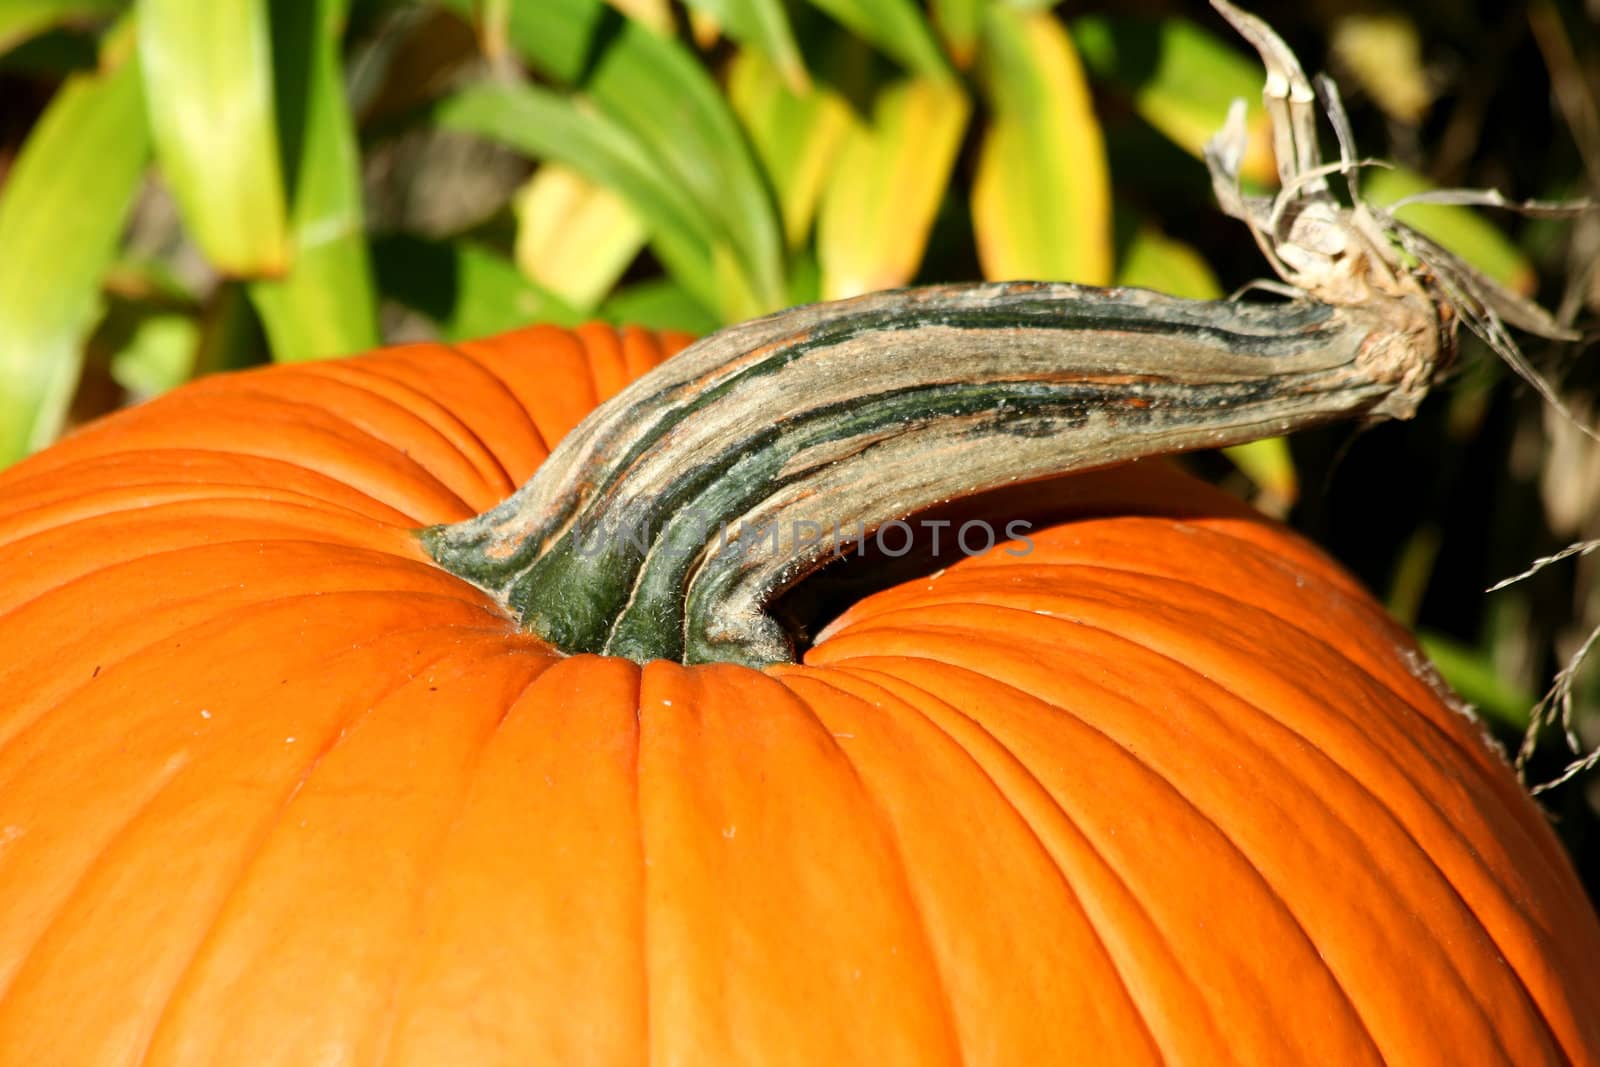 Close up of a Pumpkin stem